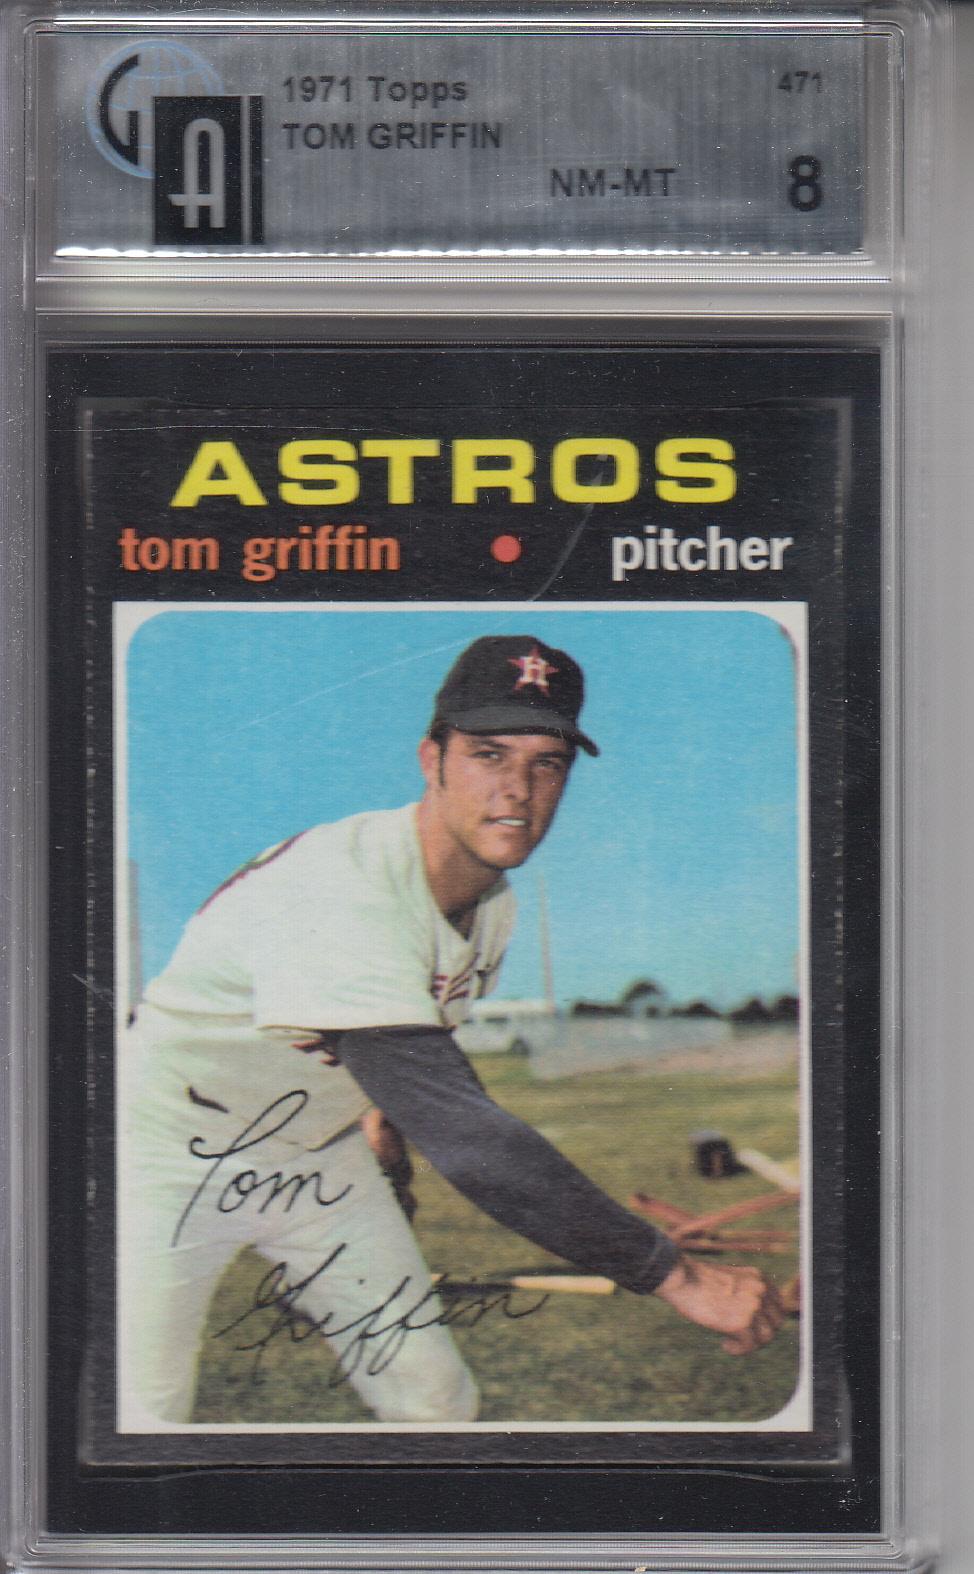 1971 Topps #471 Tom Griffin ASTROS GAI 8 NM-MT Z15683